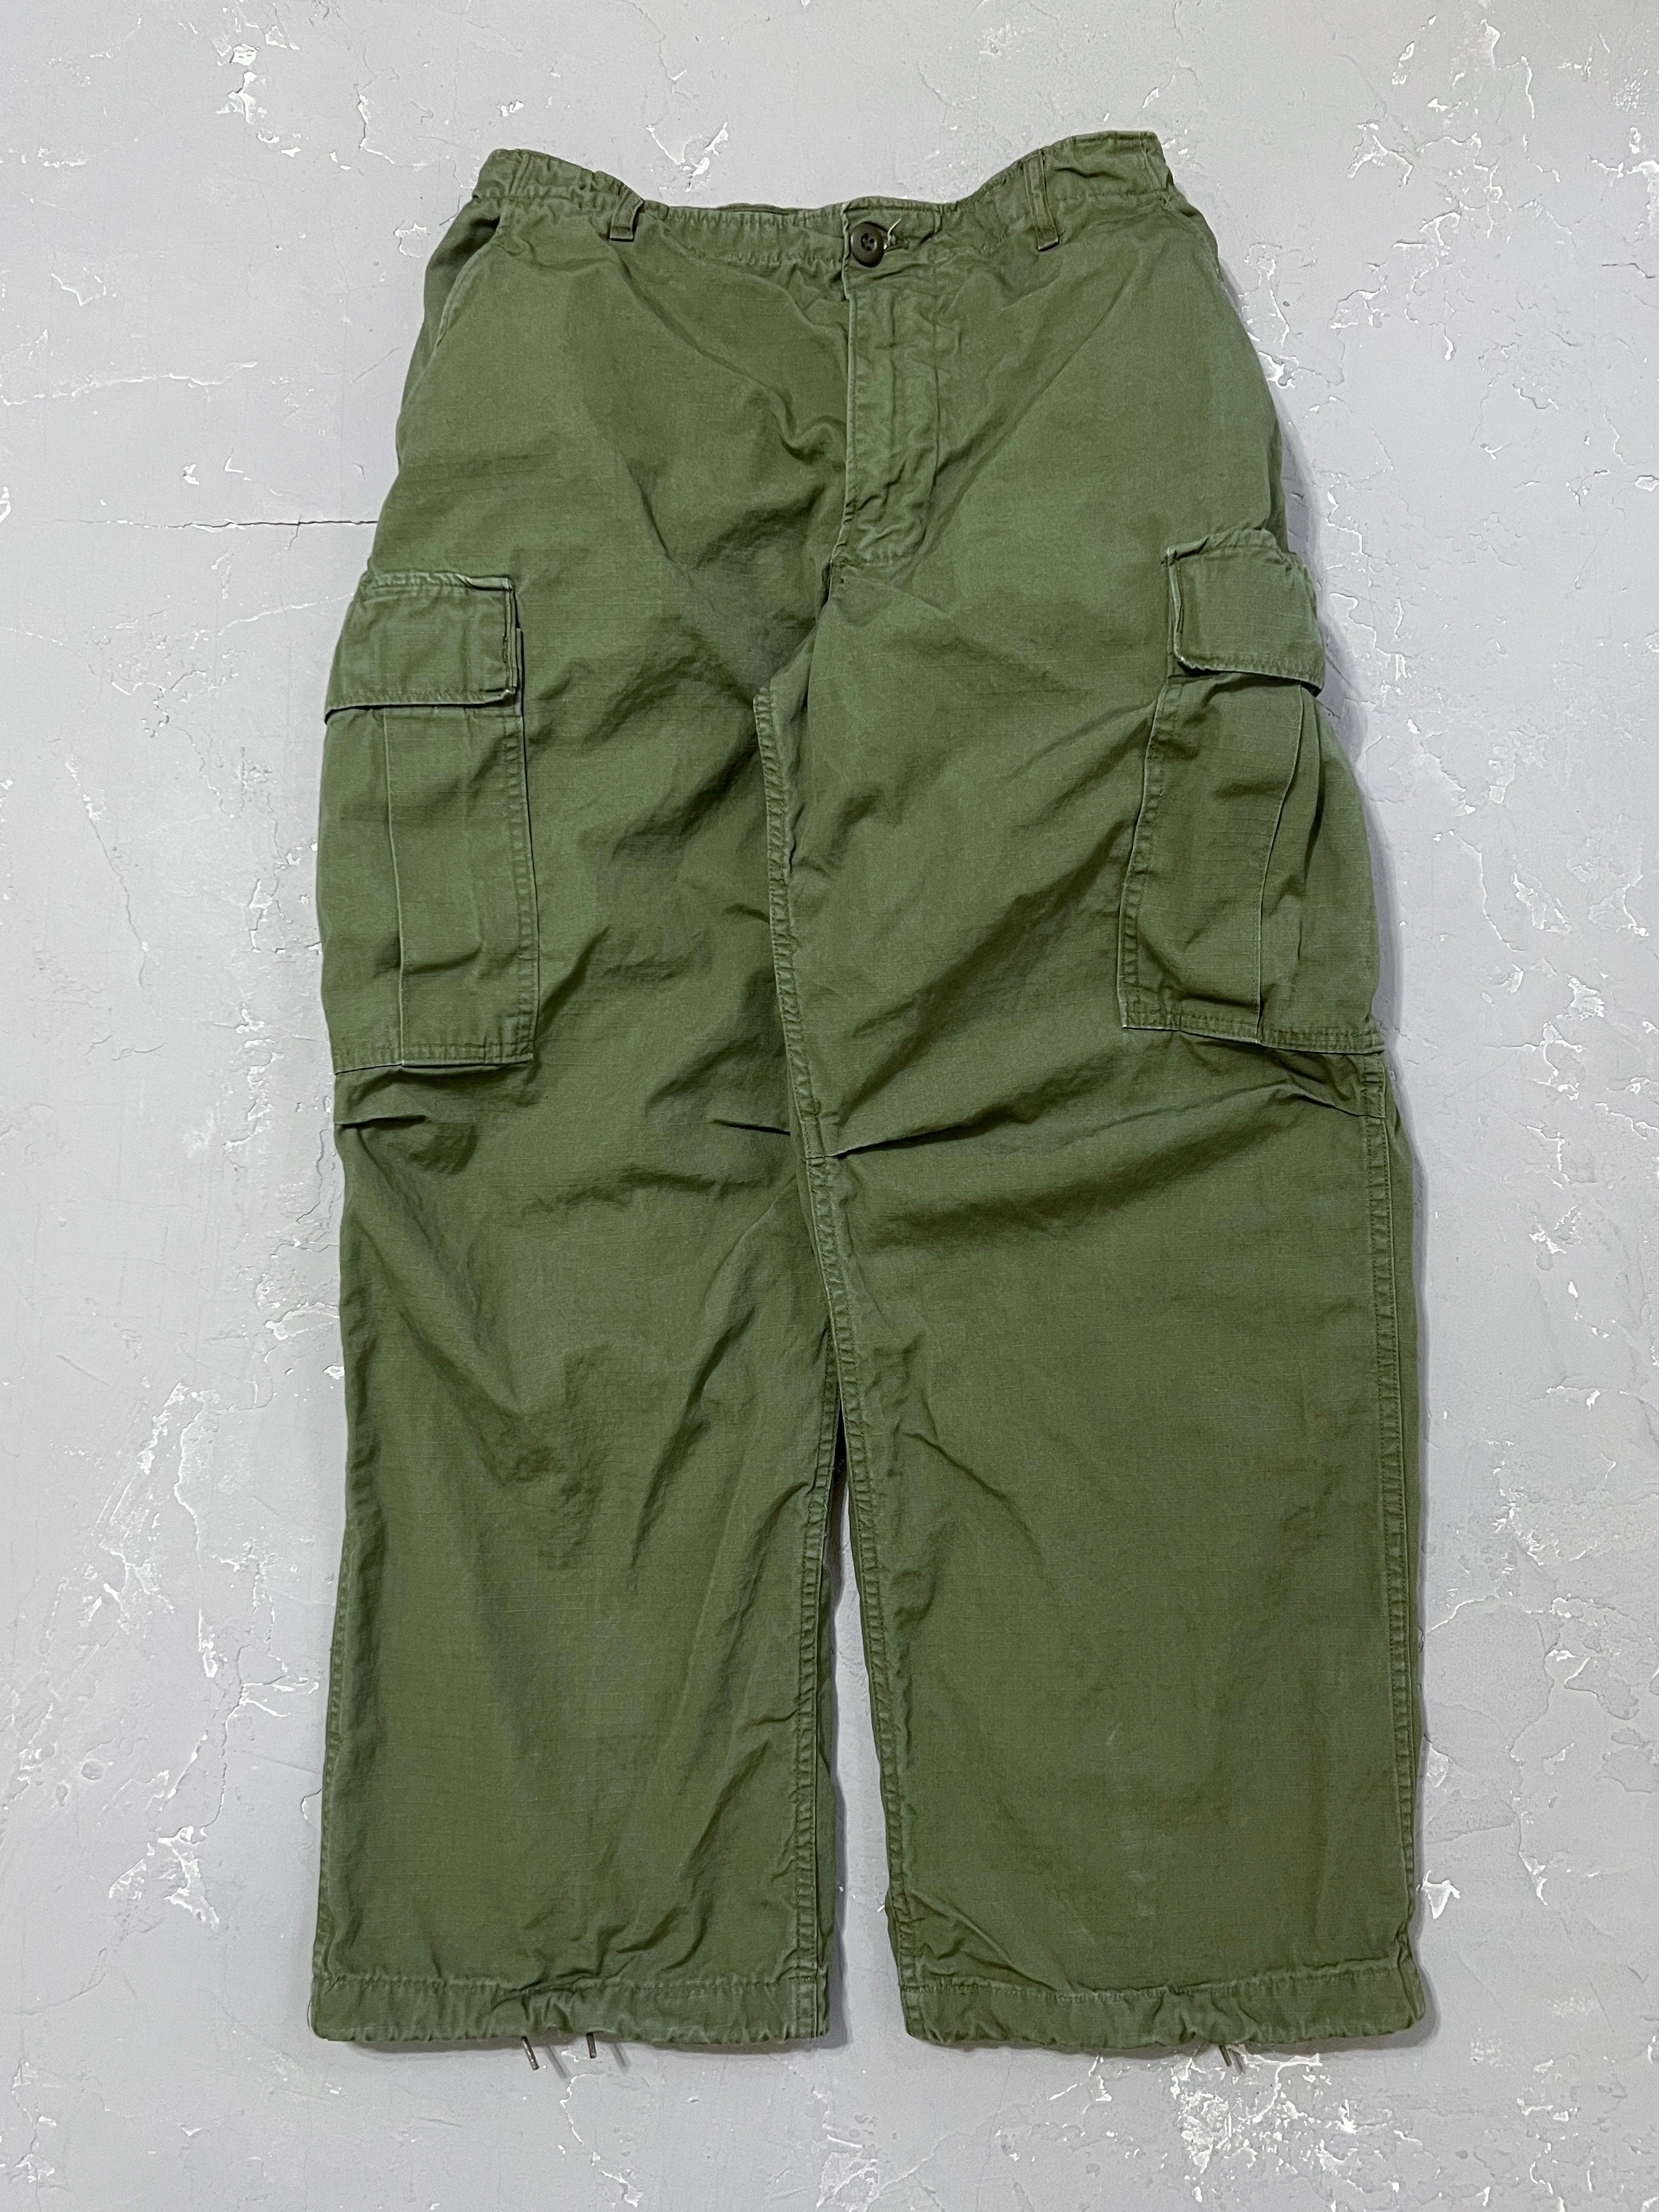 1969 Vietnam War OG-107 Tropical Combat Pants [28-31 x 30]